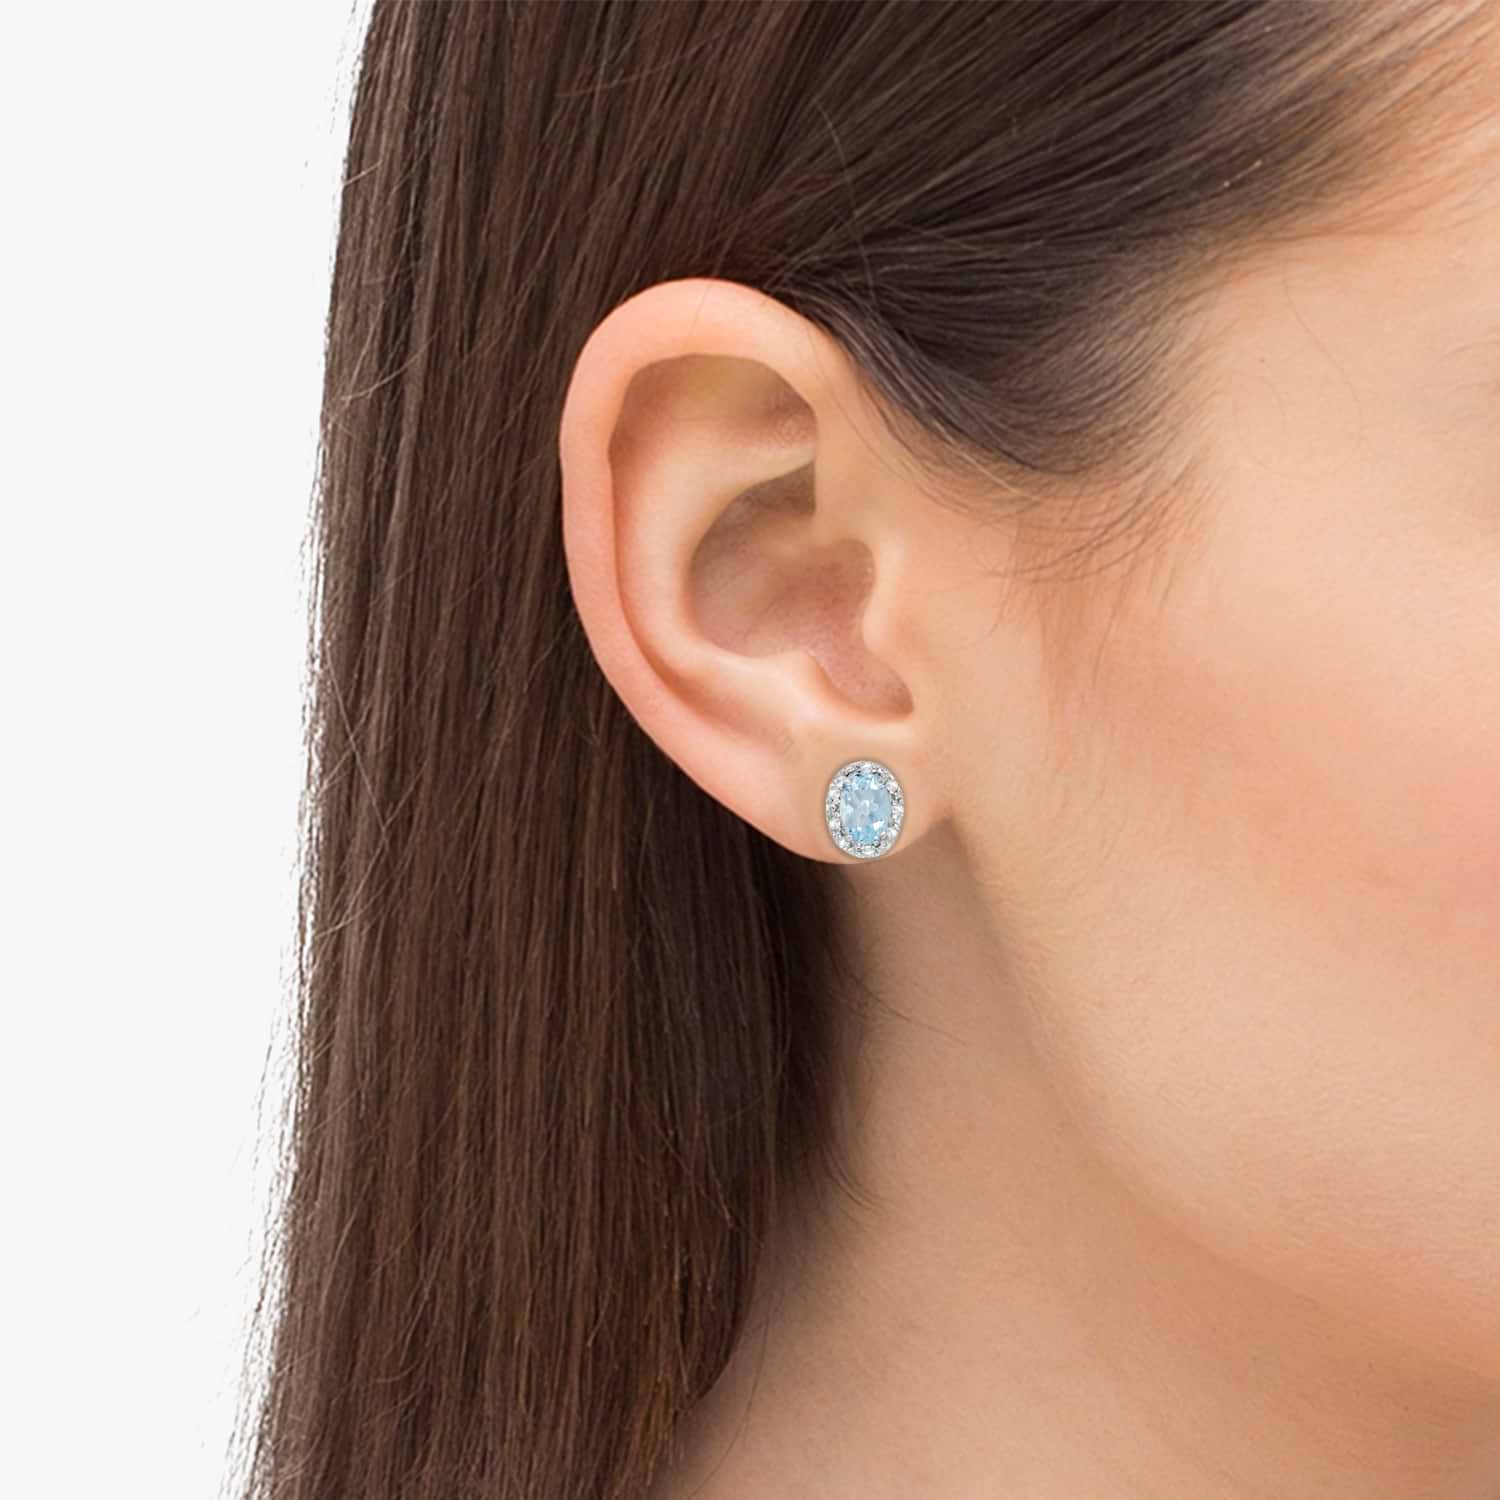 Diamond and Aquamarine Earrings 14k White Gold (0.80ct)